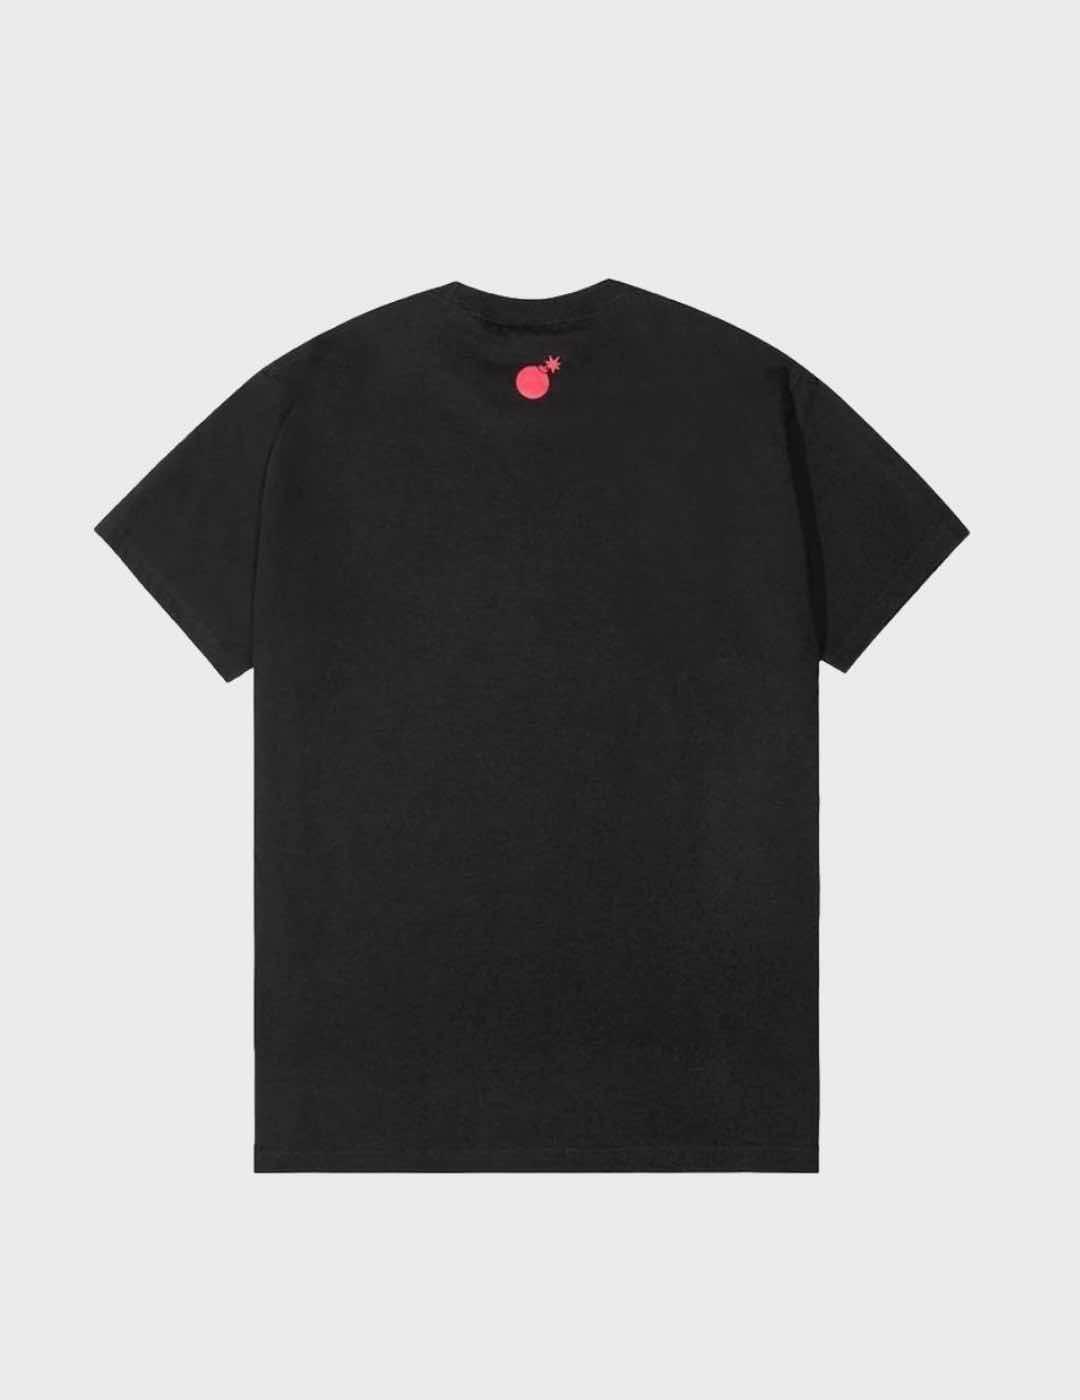 Camiseta The Hundreds Cherry Bomb Black